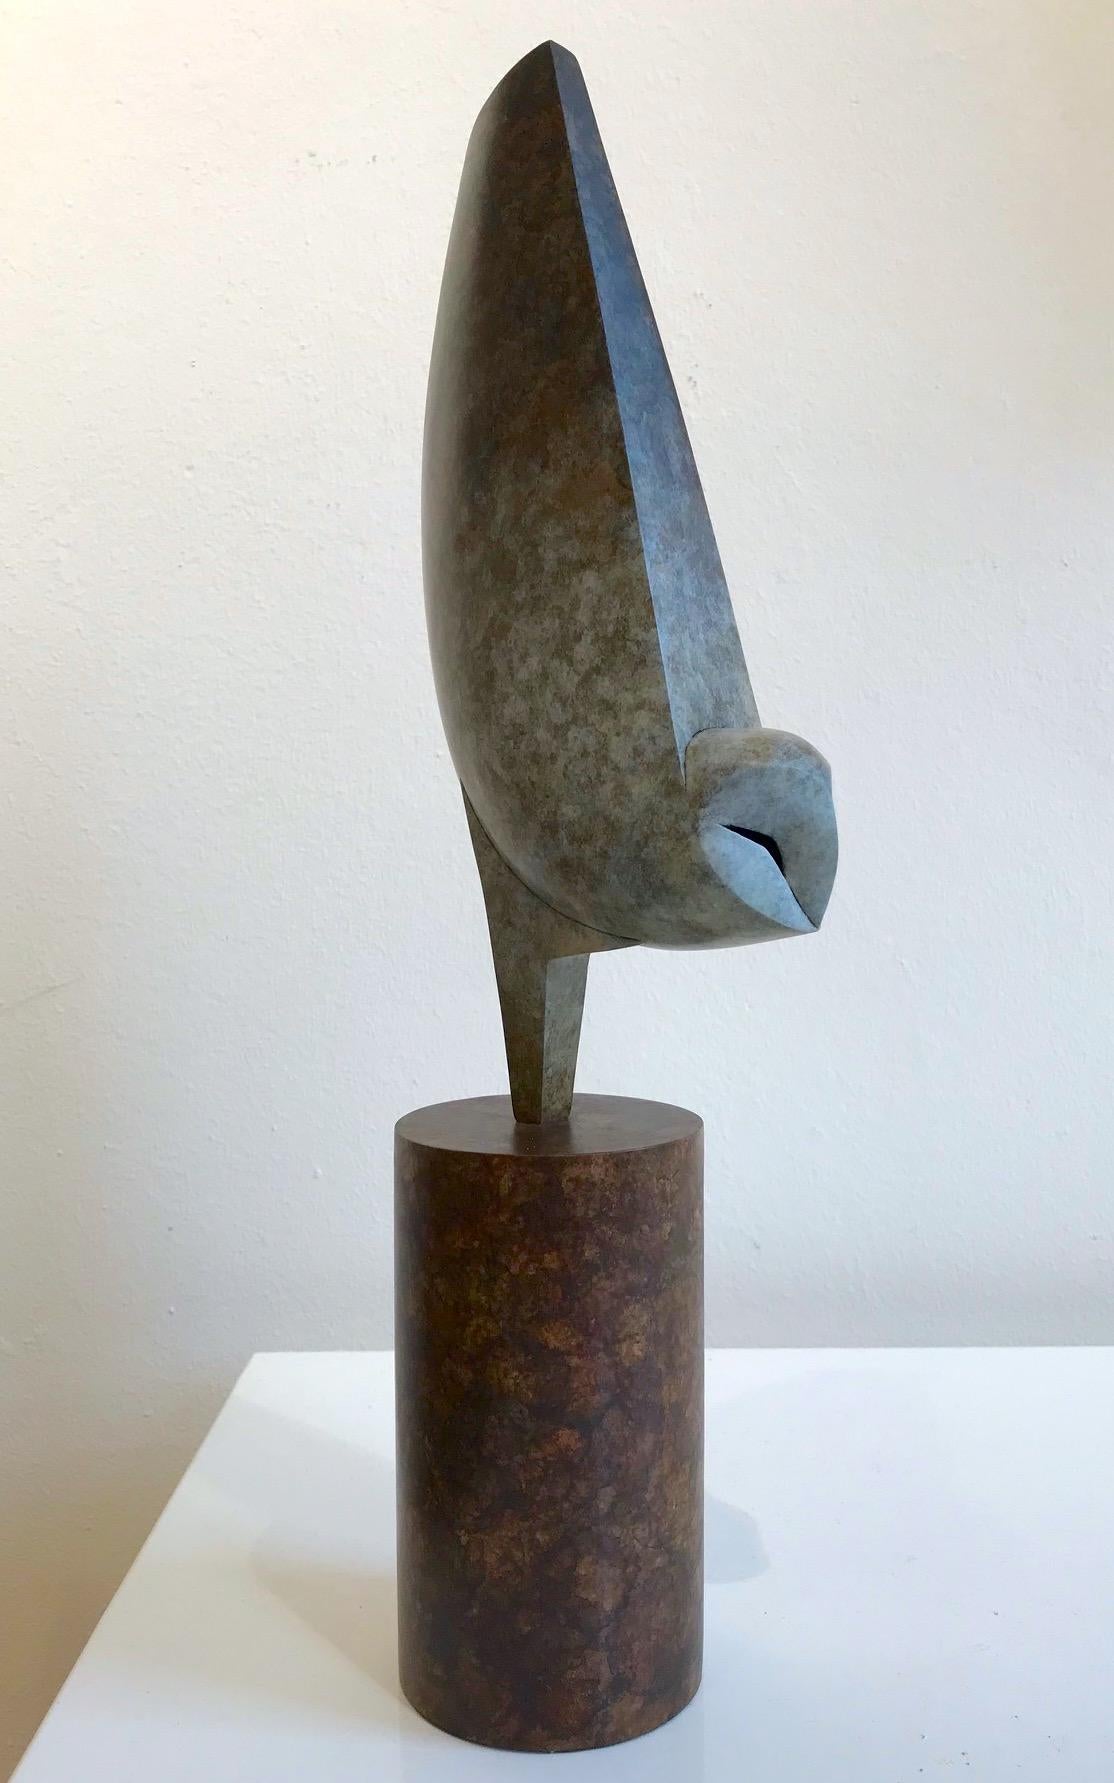 Anthony Theakston Figurative Sculpture - "Spirit Owl" Contemporary Bronze Sculpture Portrait of an Owl